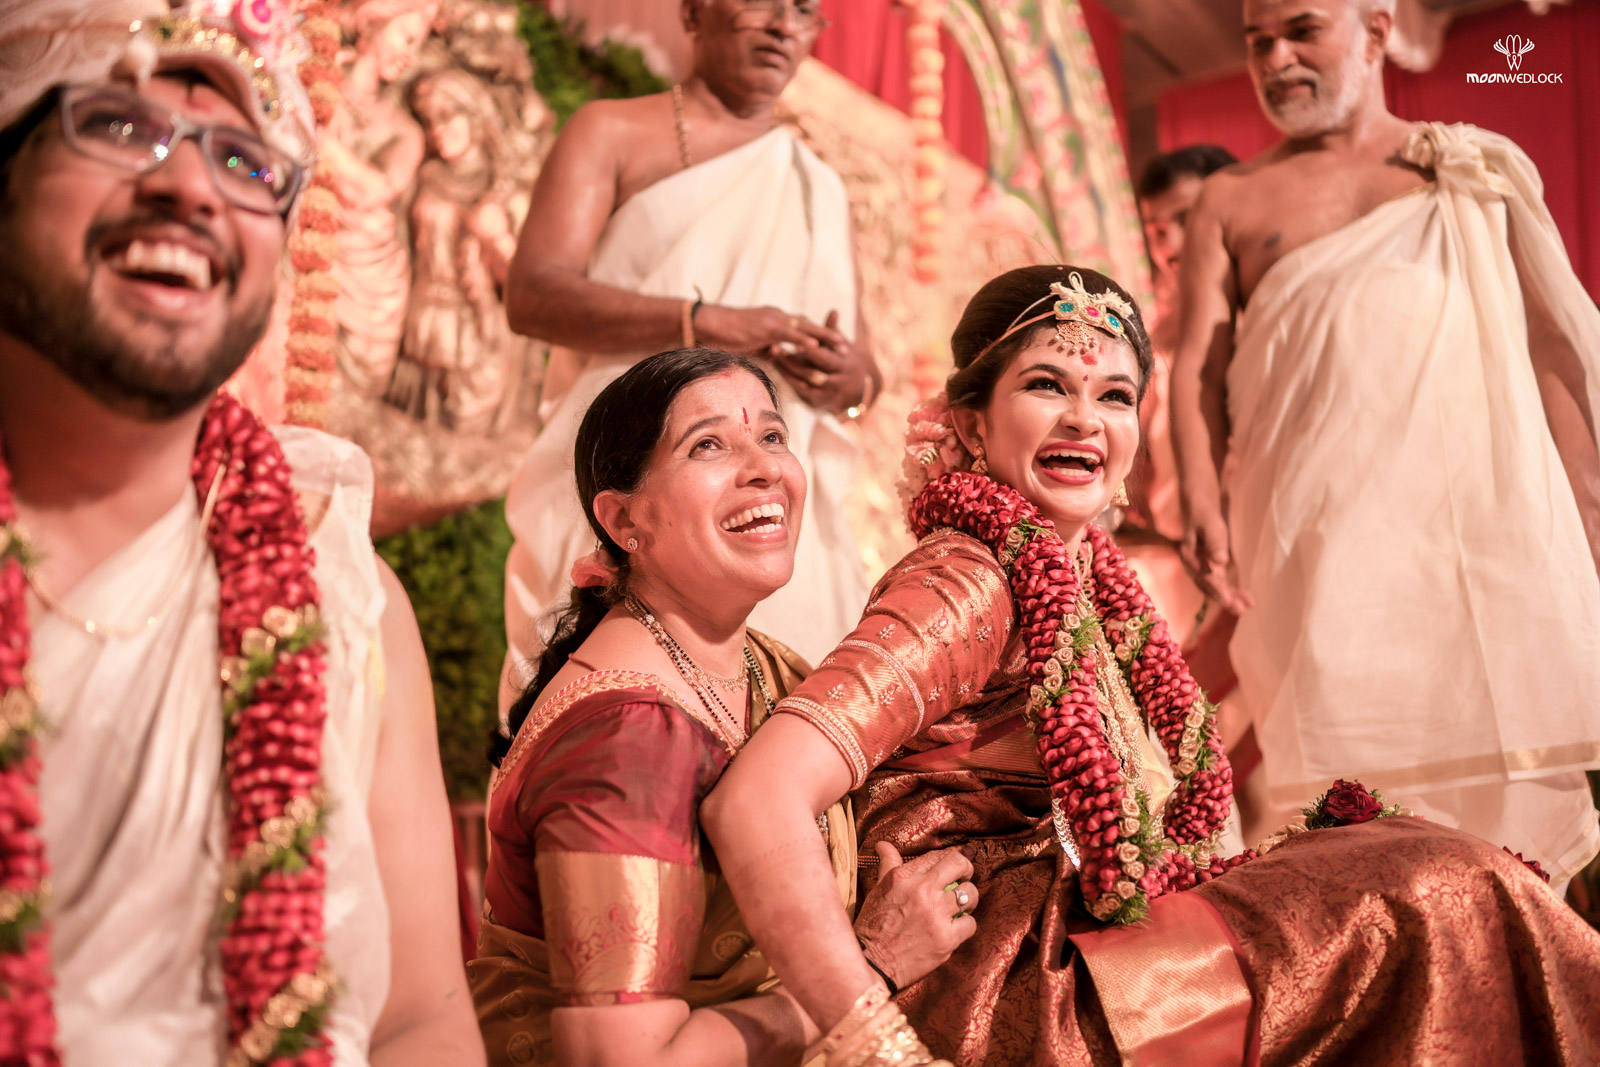 kannada-wedding-photographers-in-bangalore-moonwedlock (41)